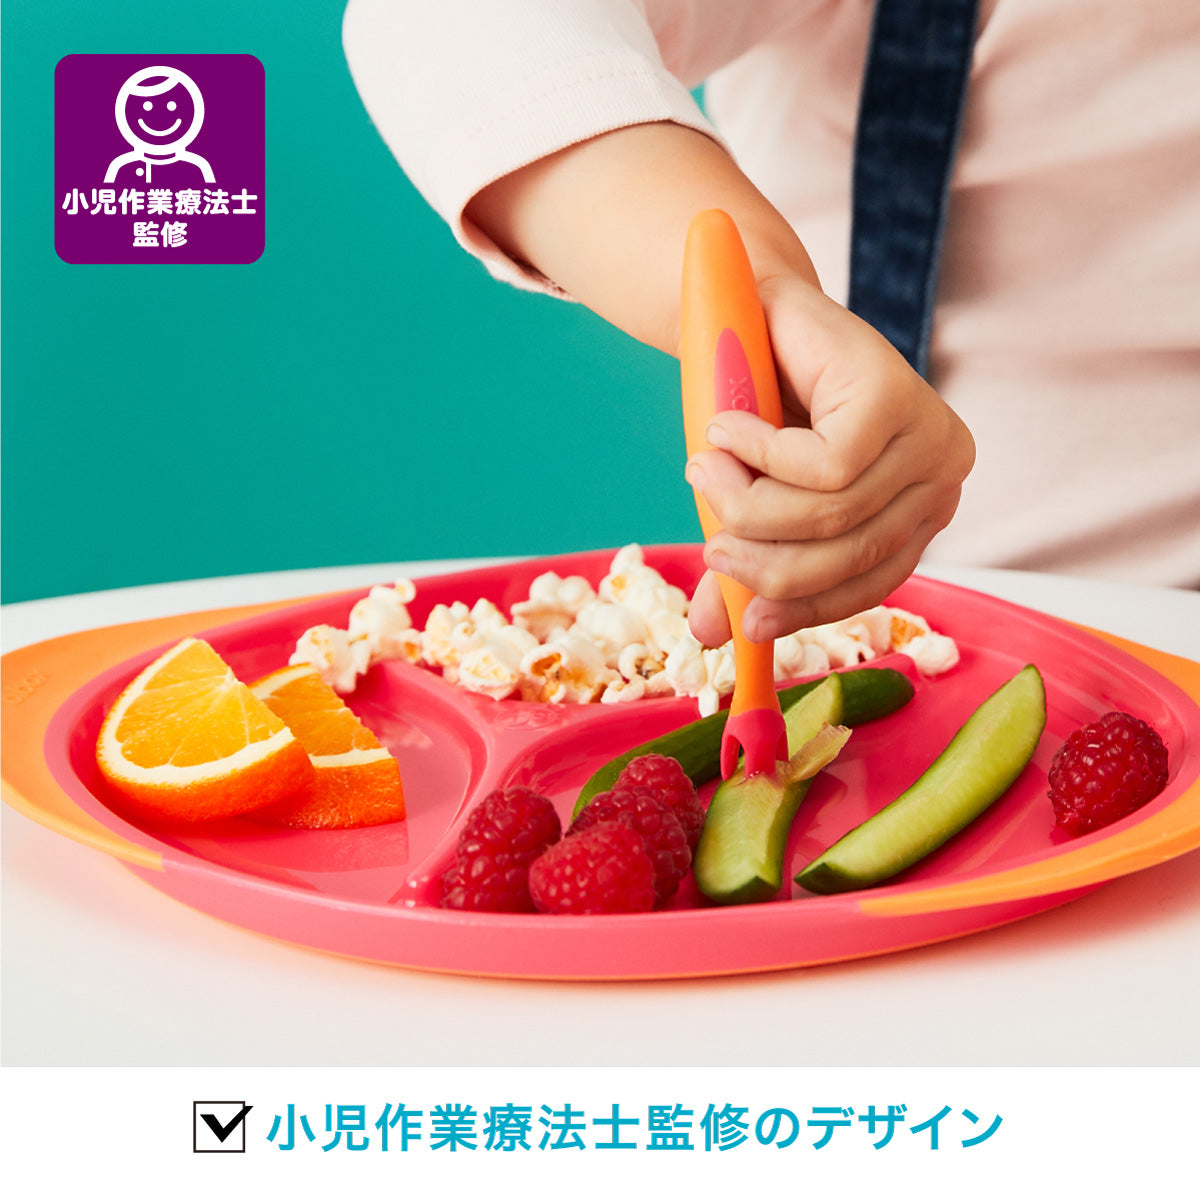 *b.box* Toddler cutlery set カトラリーセット - strawberry shake - b.box Japan